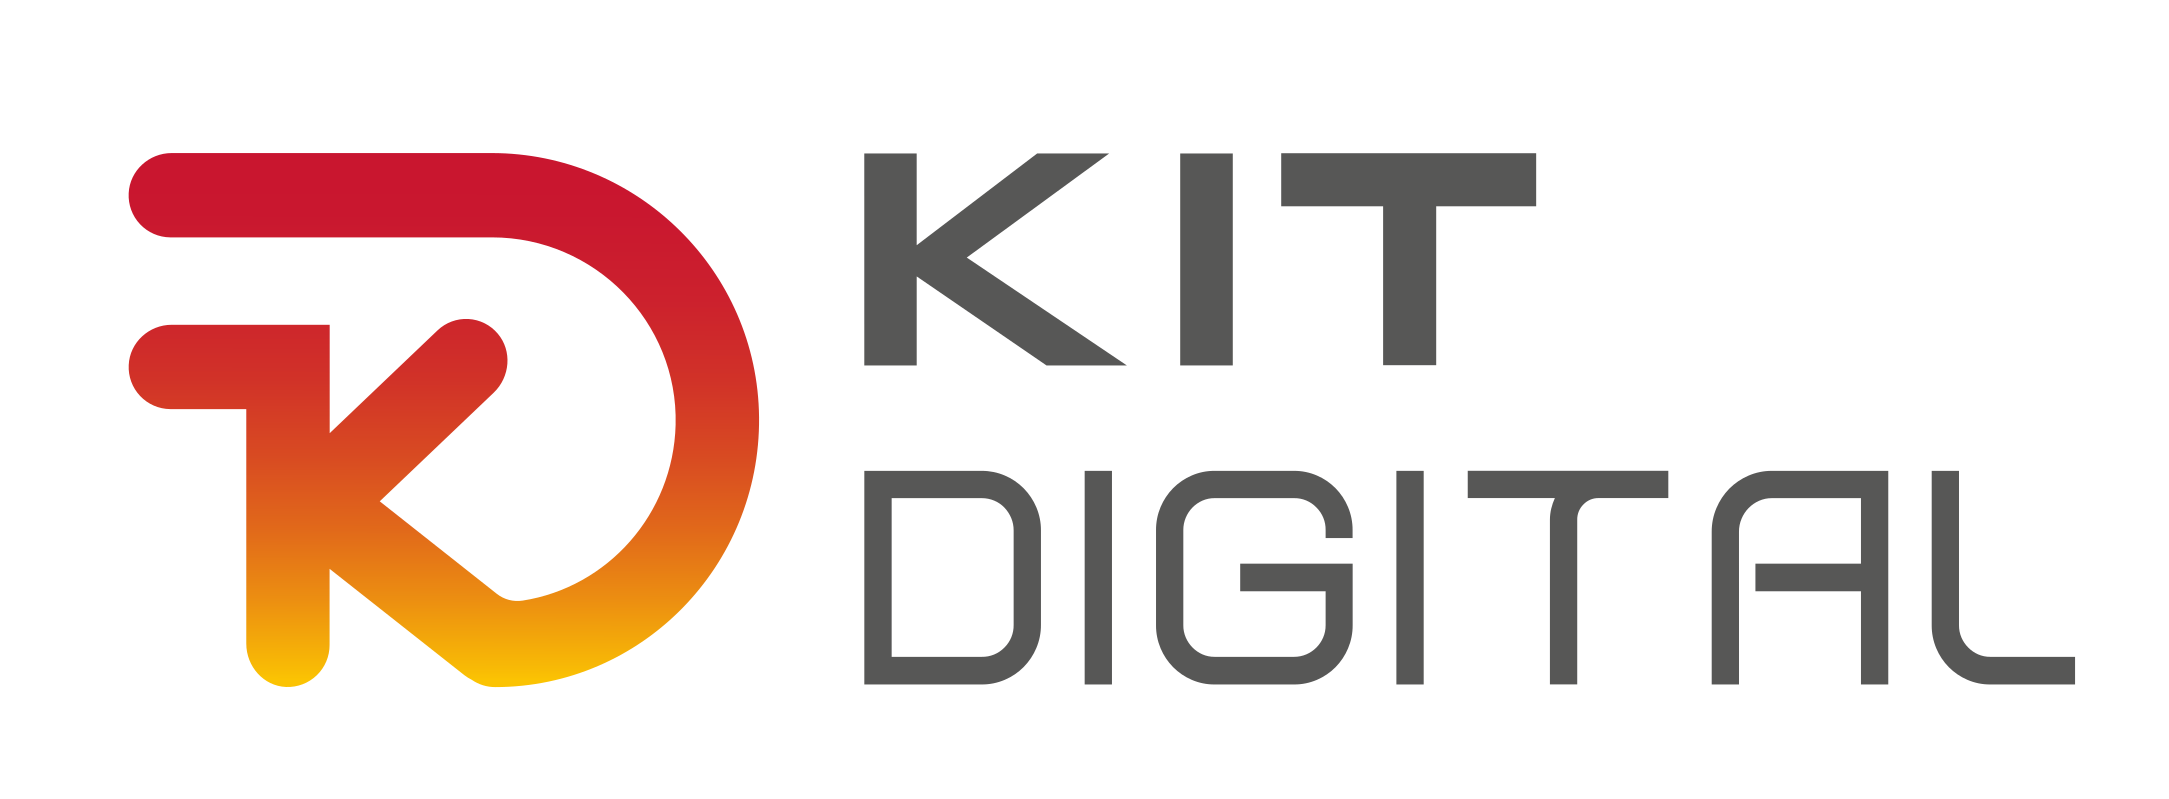 Logo-Kit-Digital-HighRes